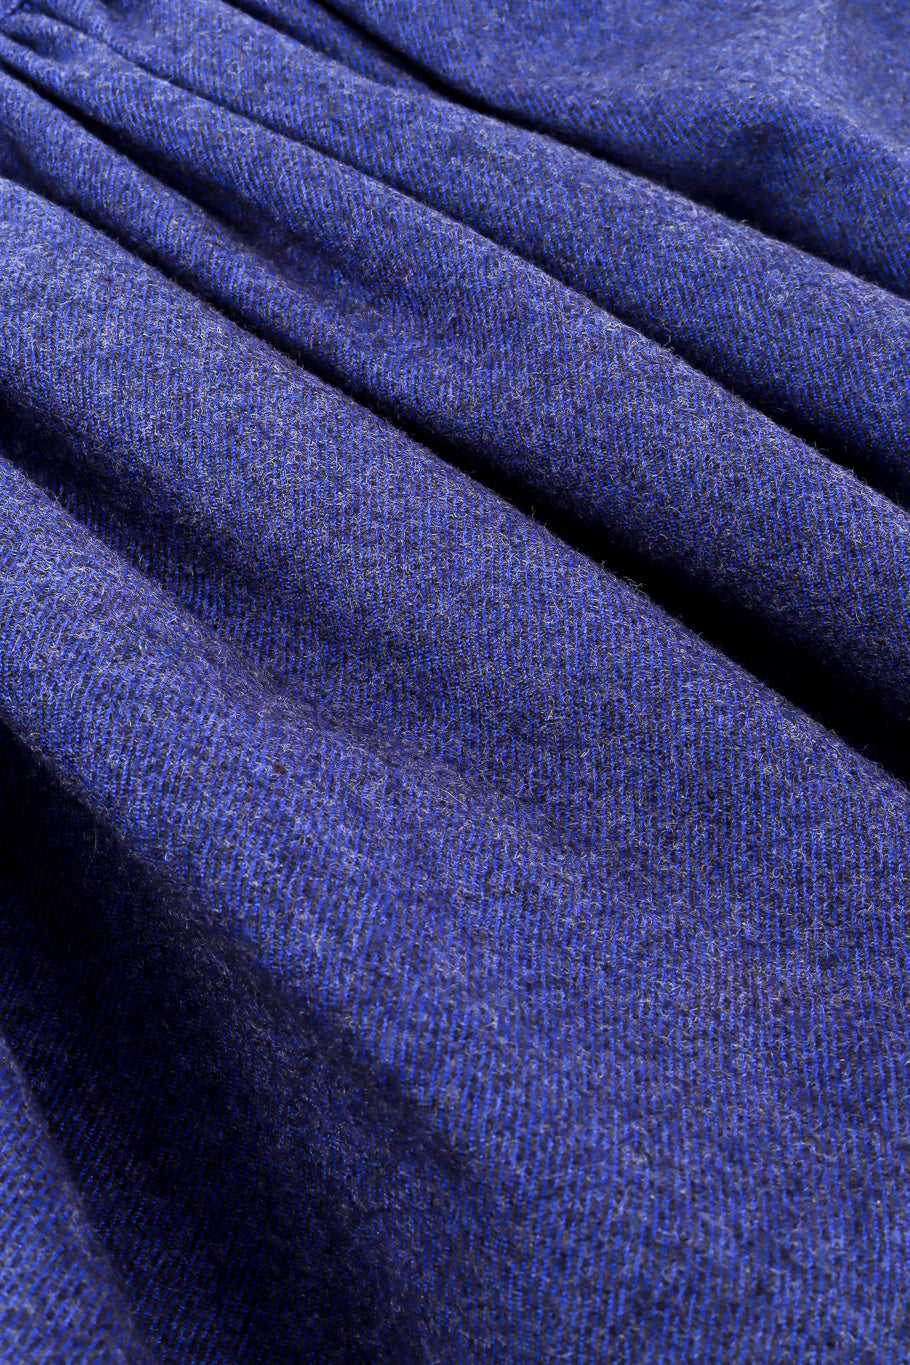 Valentino Boutique cotton denim top and skirt set fabric details @recessla